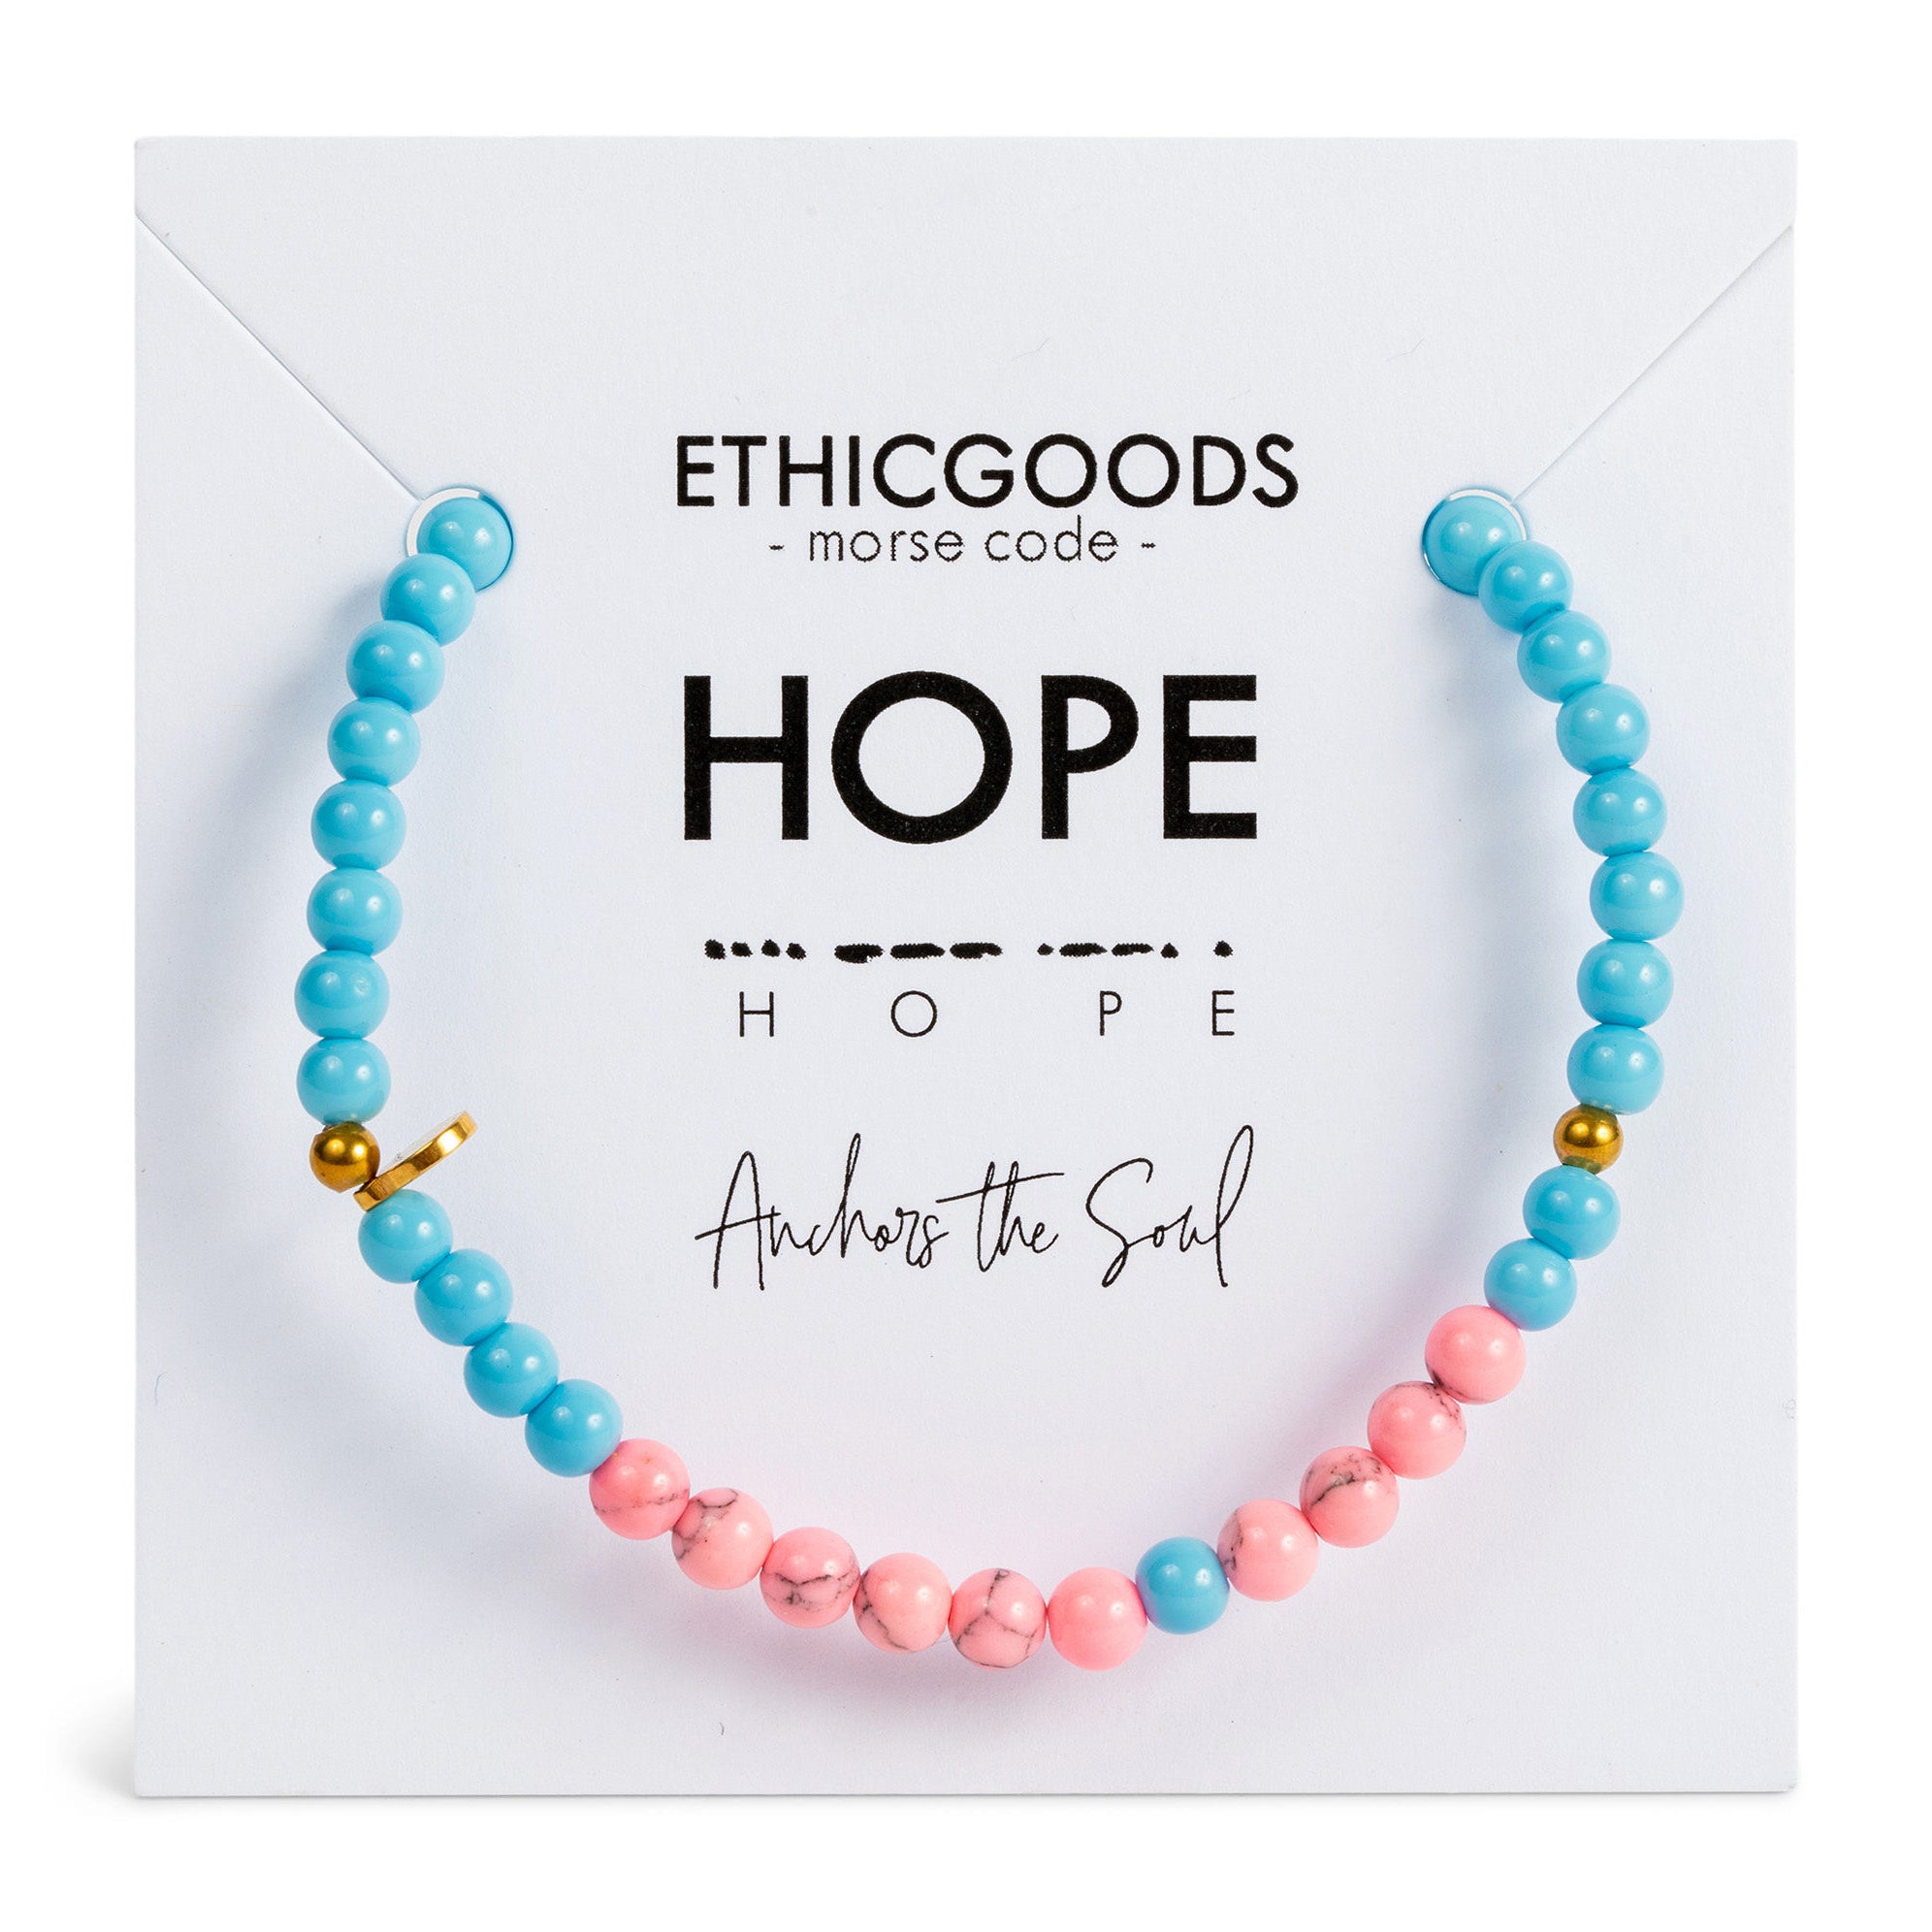 Morse Code Bracelet | HOPE